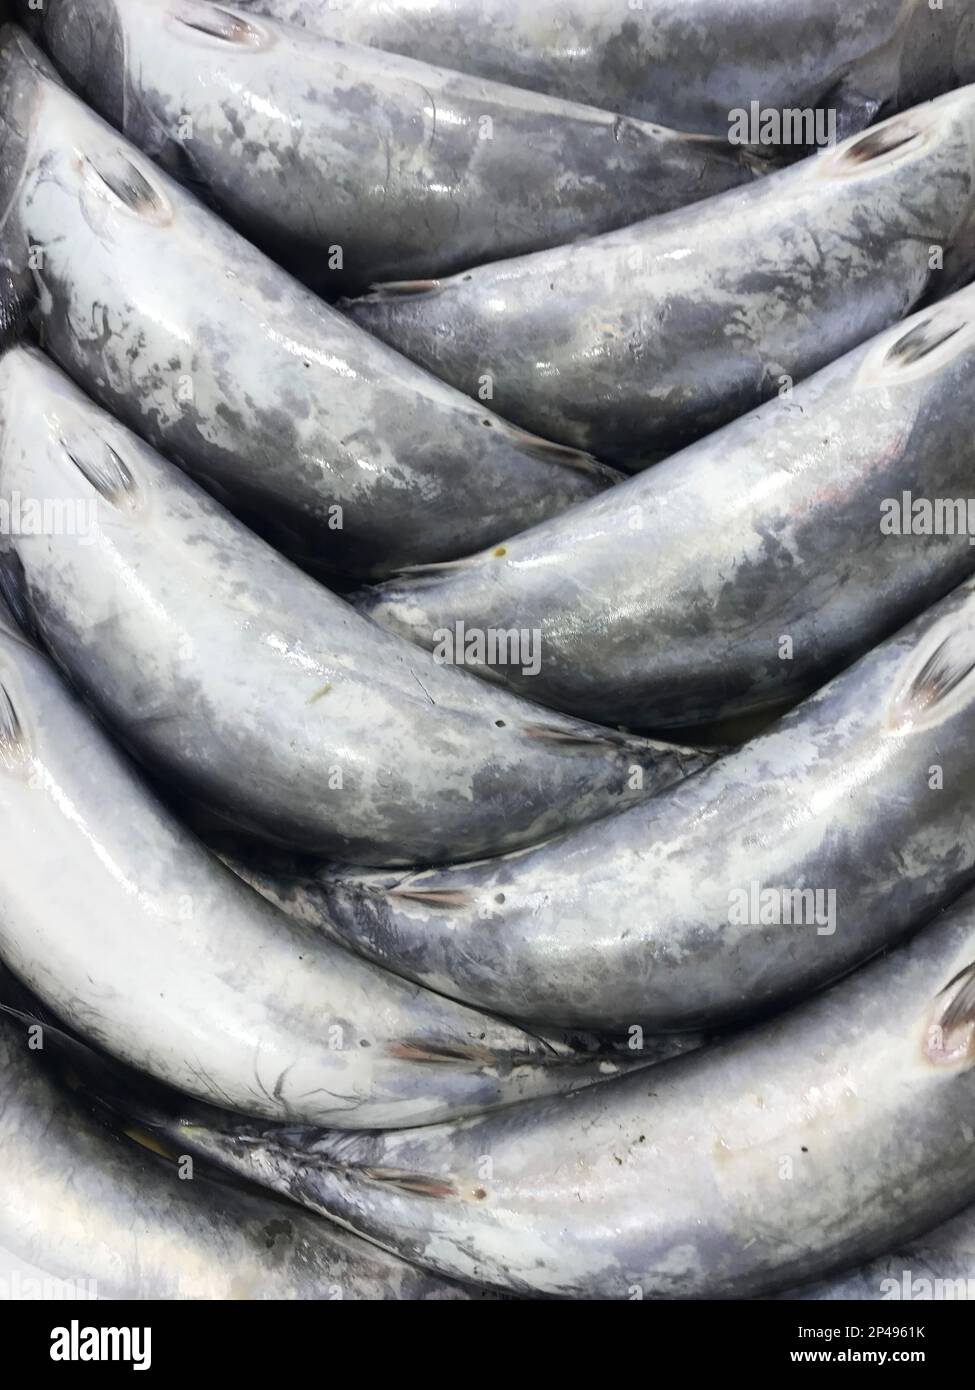 Raw Bonito fish (Turkish: Palamut) on the fish counter. Stock Photo